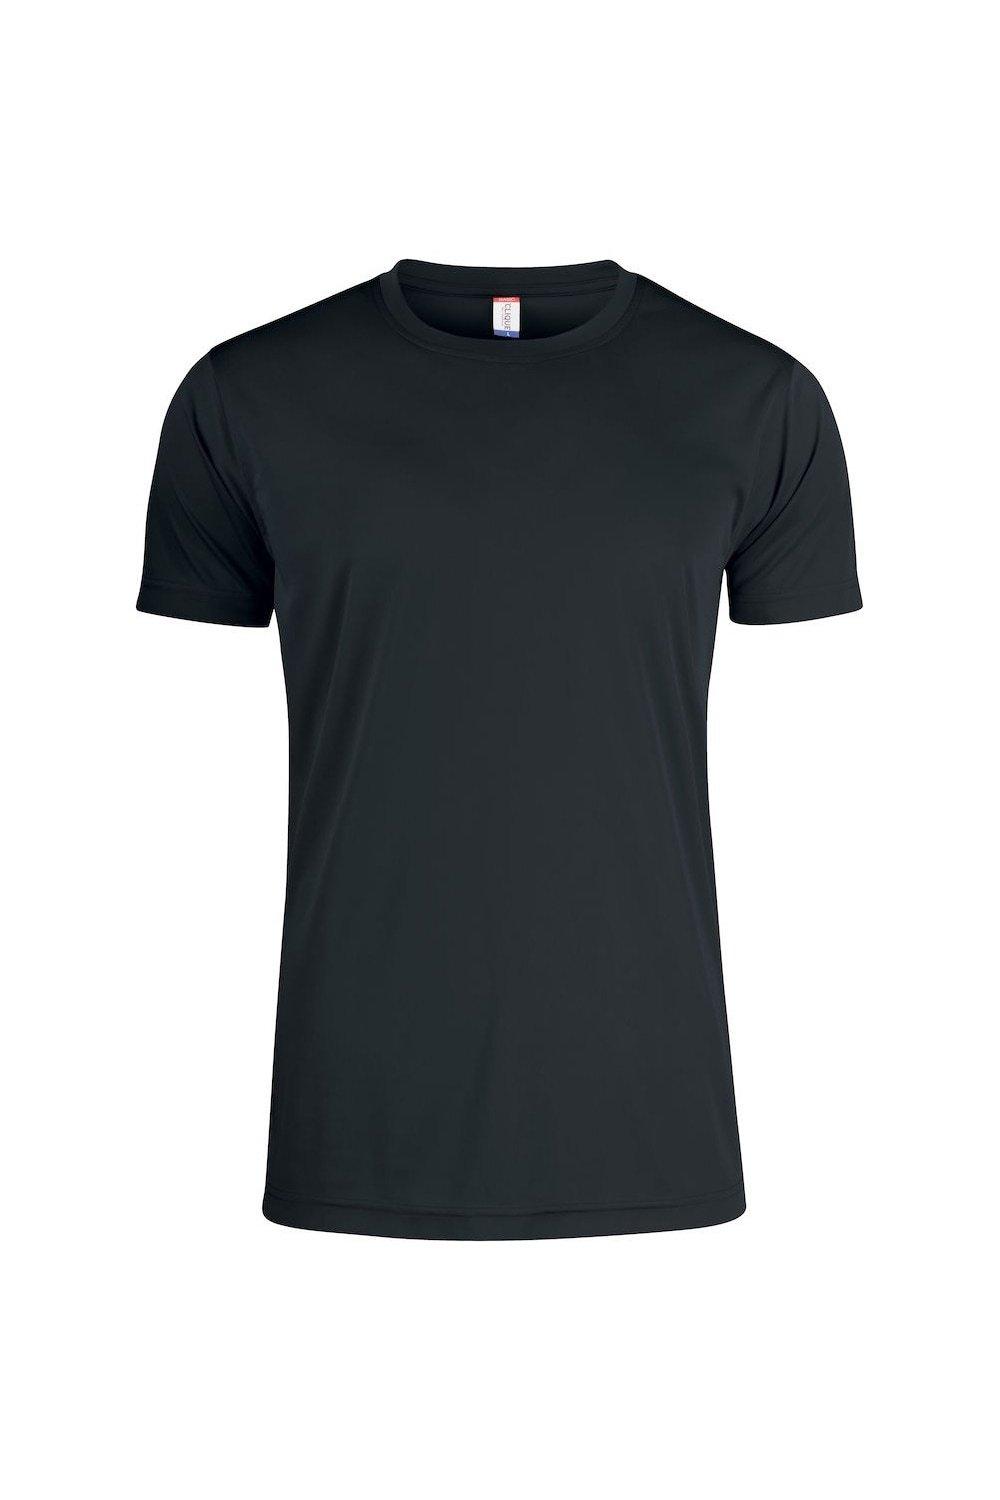 Активная футболка Clique, черный футболка clique с надписью 42 размер